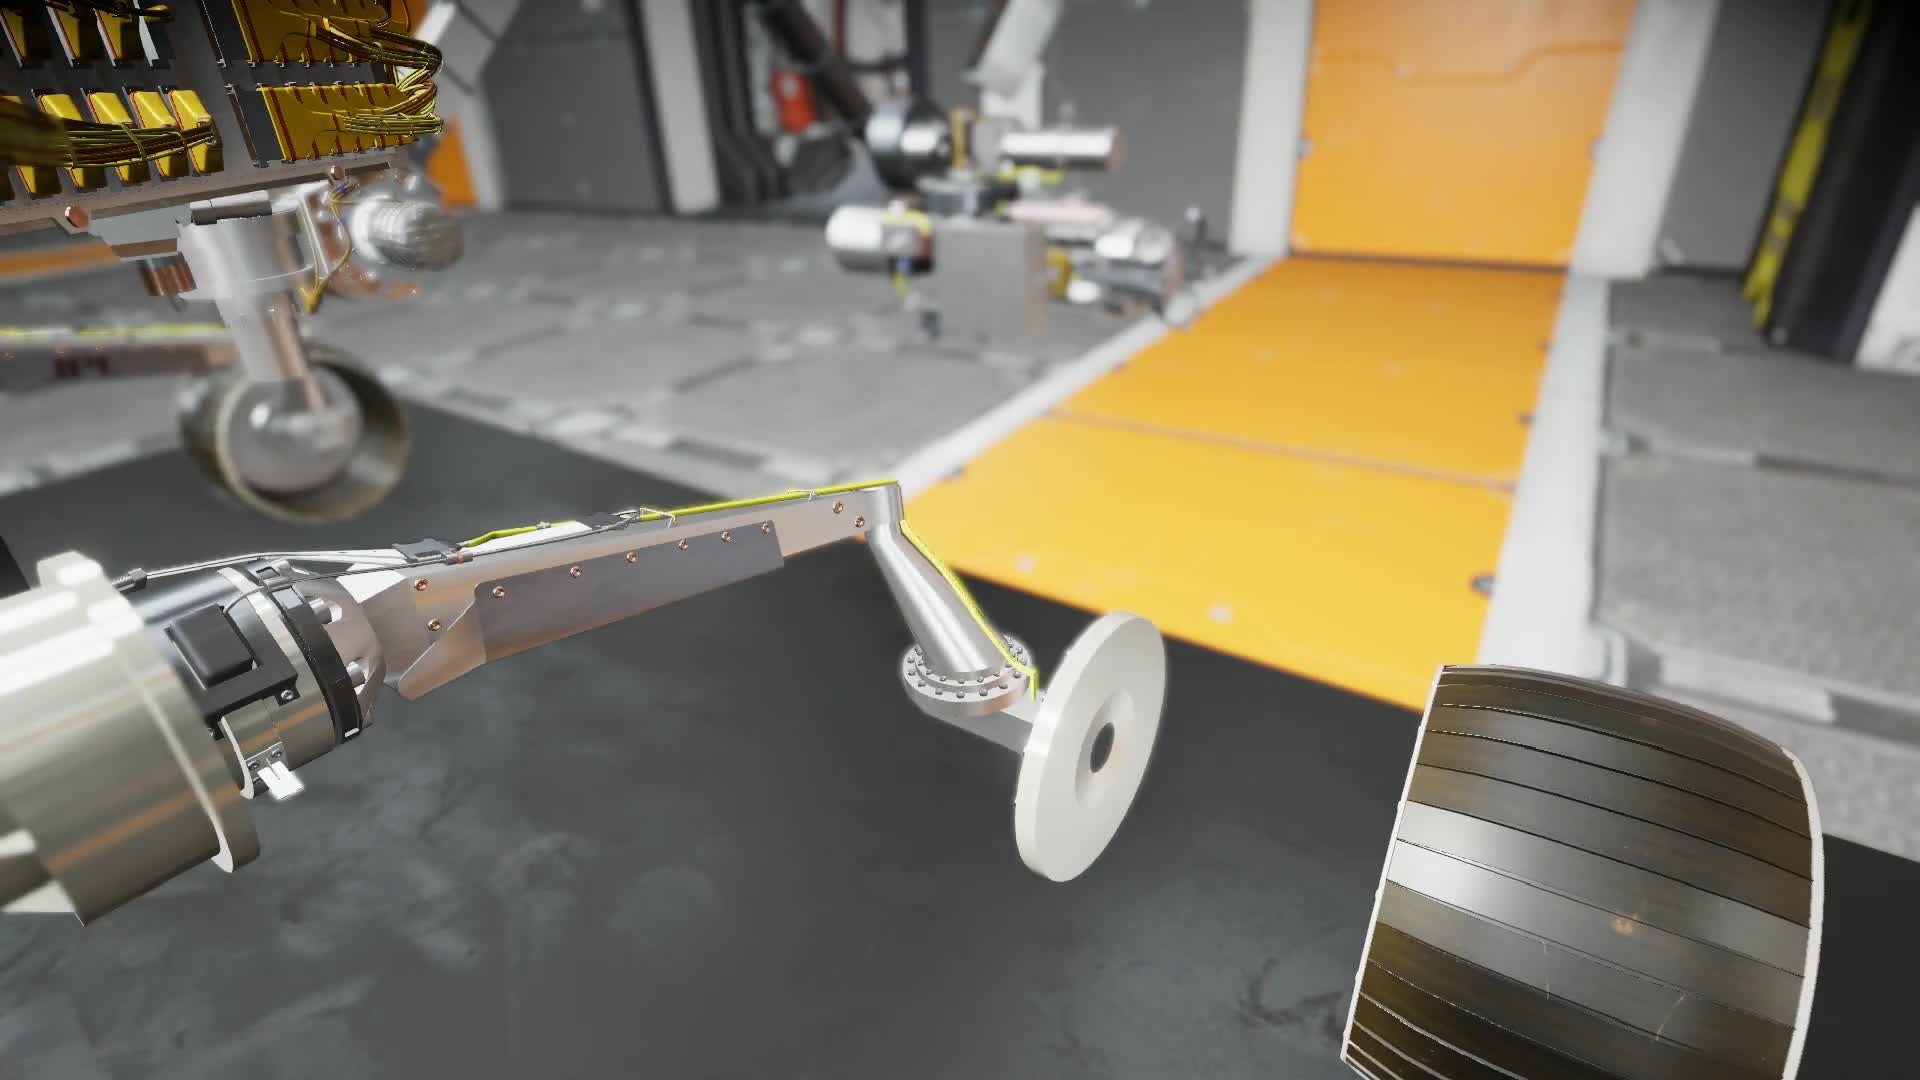 Rover Mechanic Simulator vm umon kontruova rovery na jazdu po Marse